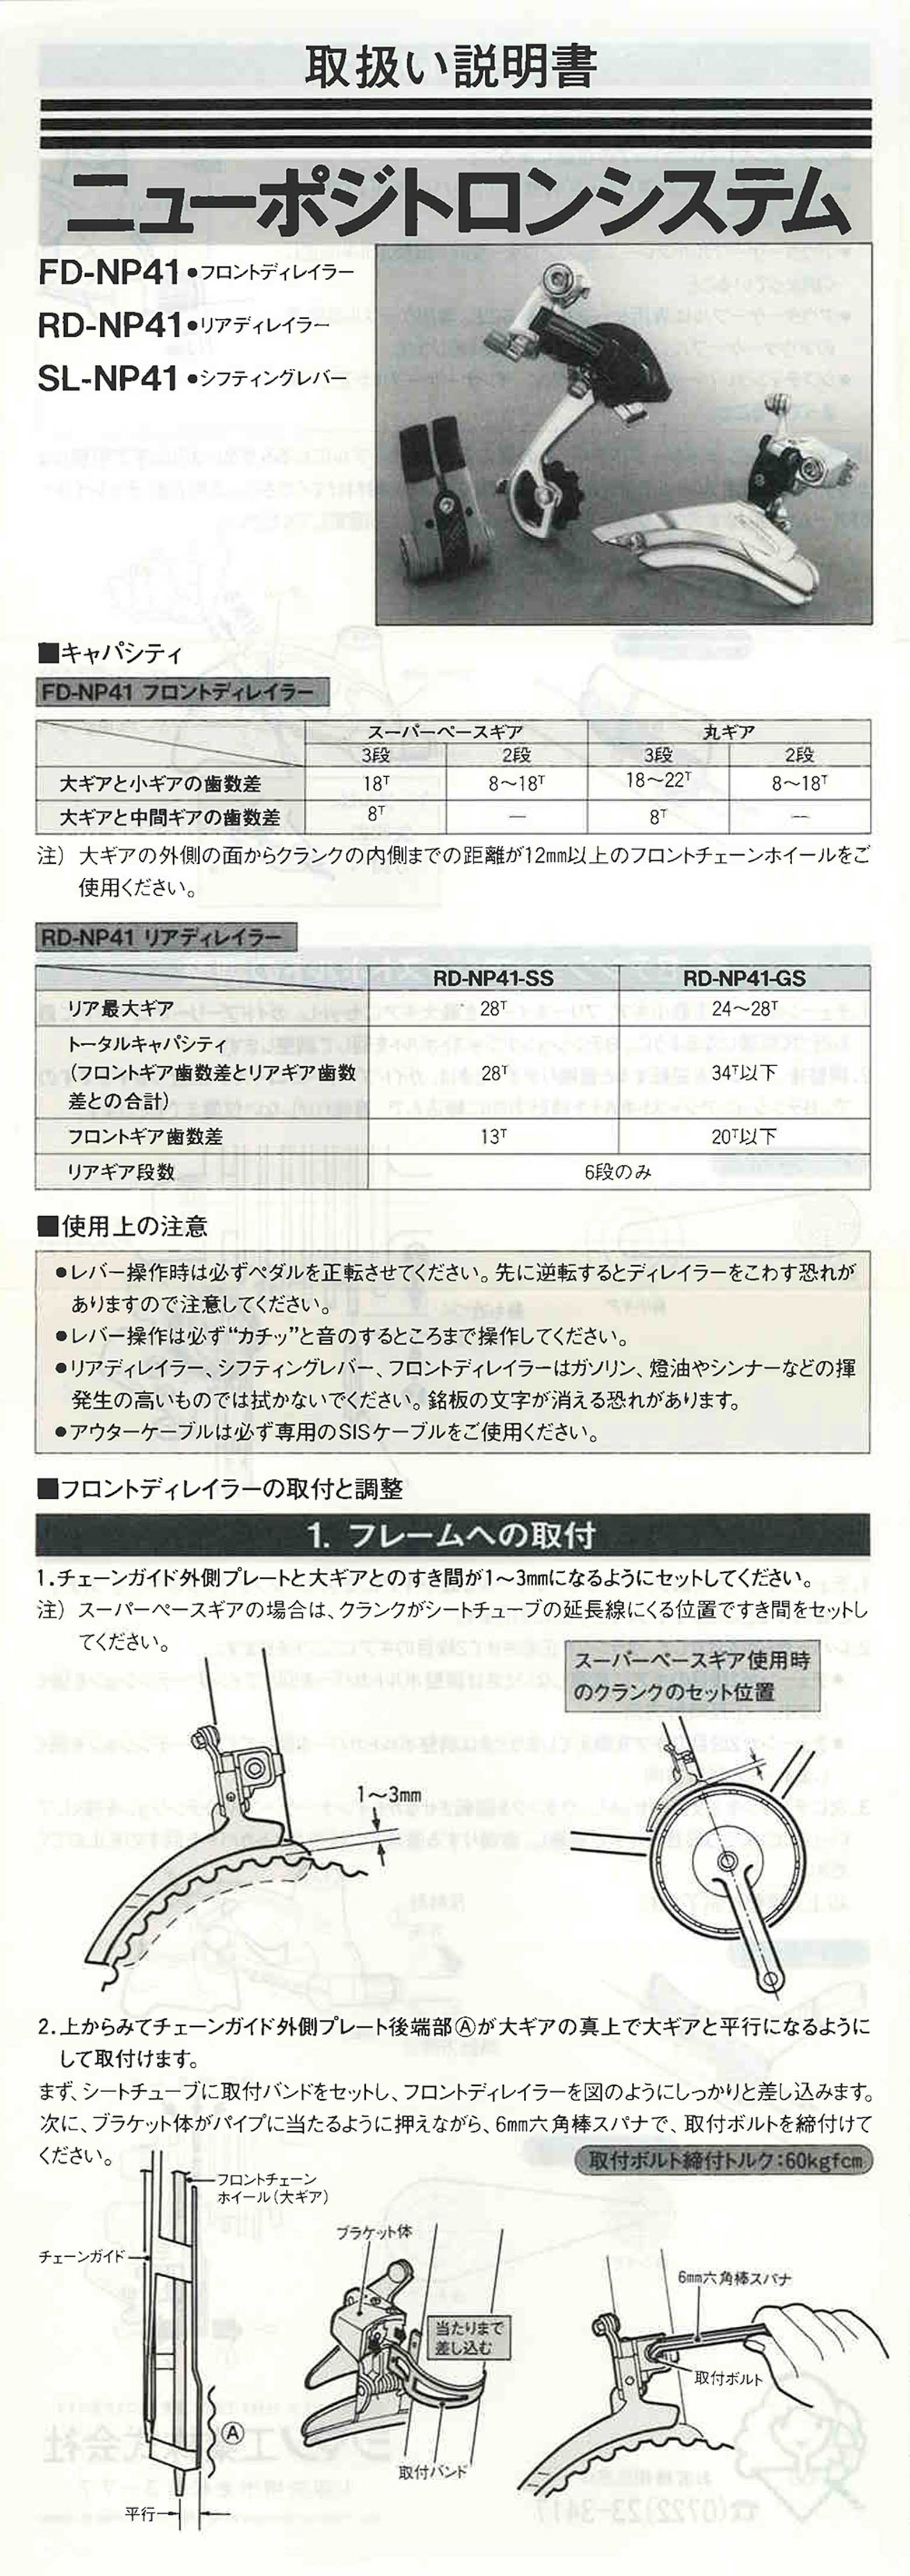 Shimano - Instruction Manual New Positron System (NP-41) scan 01 main image